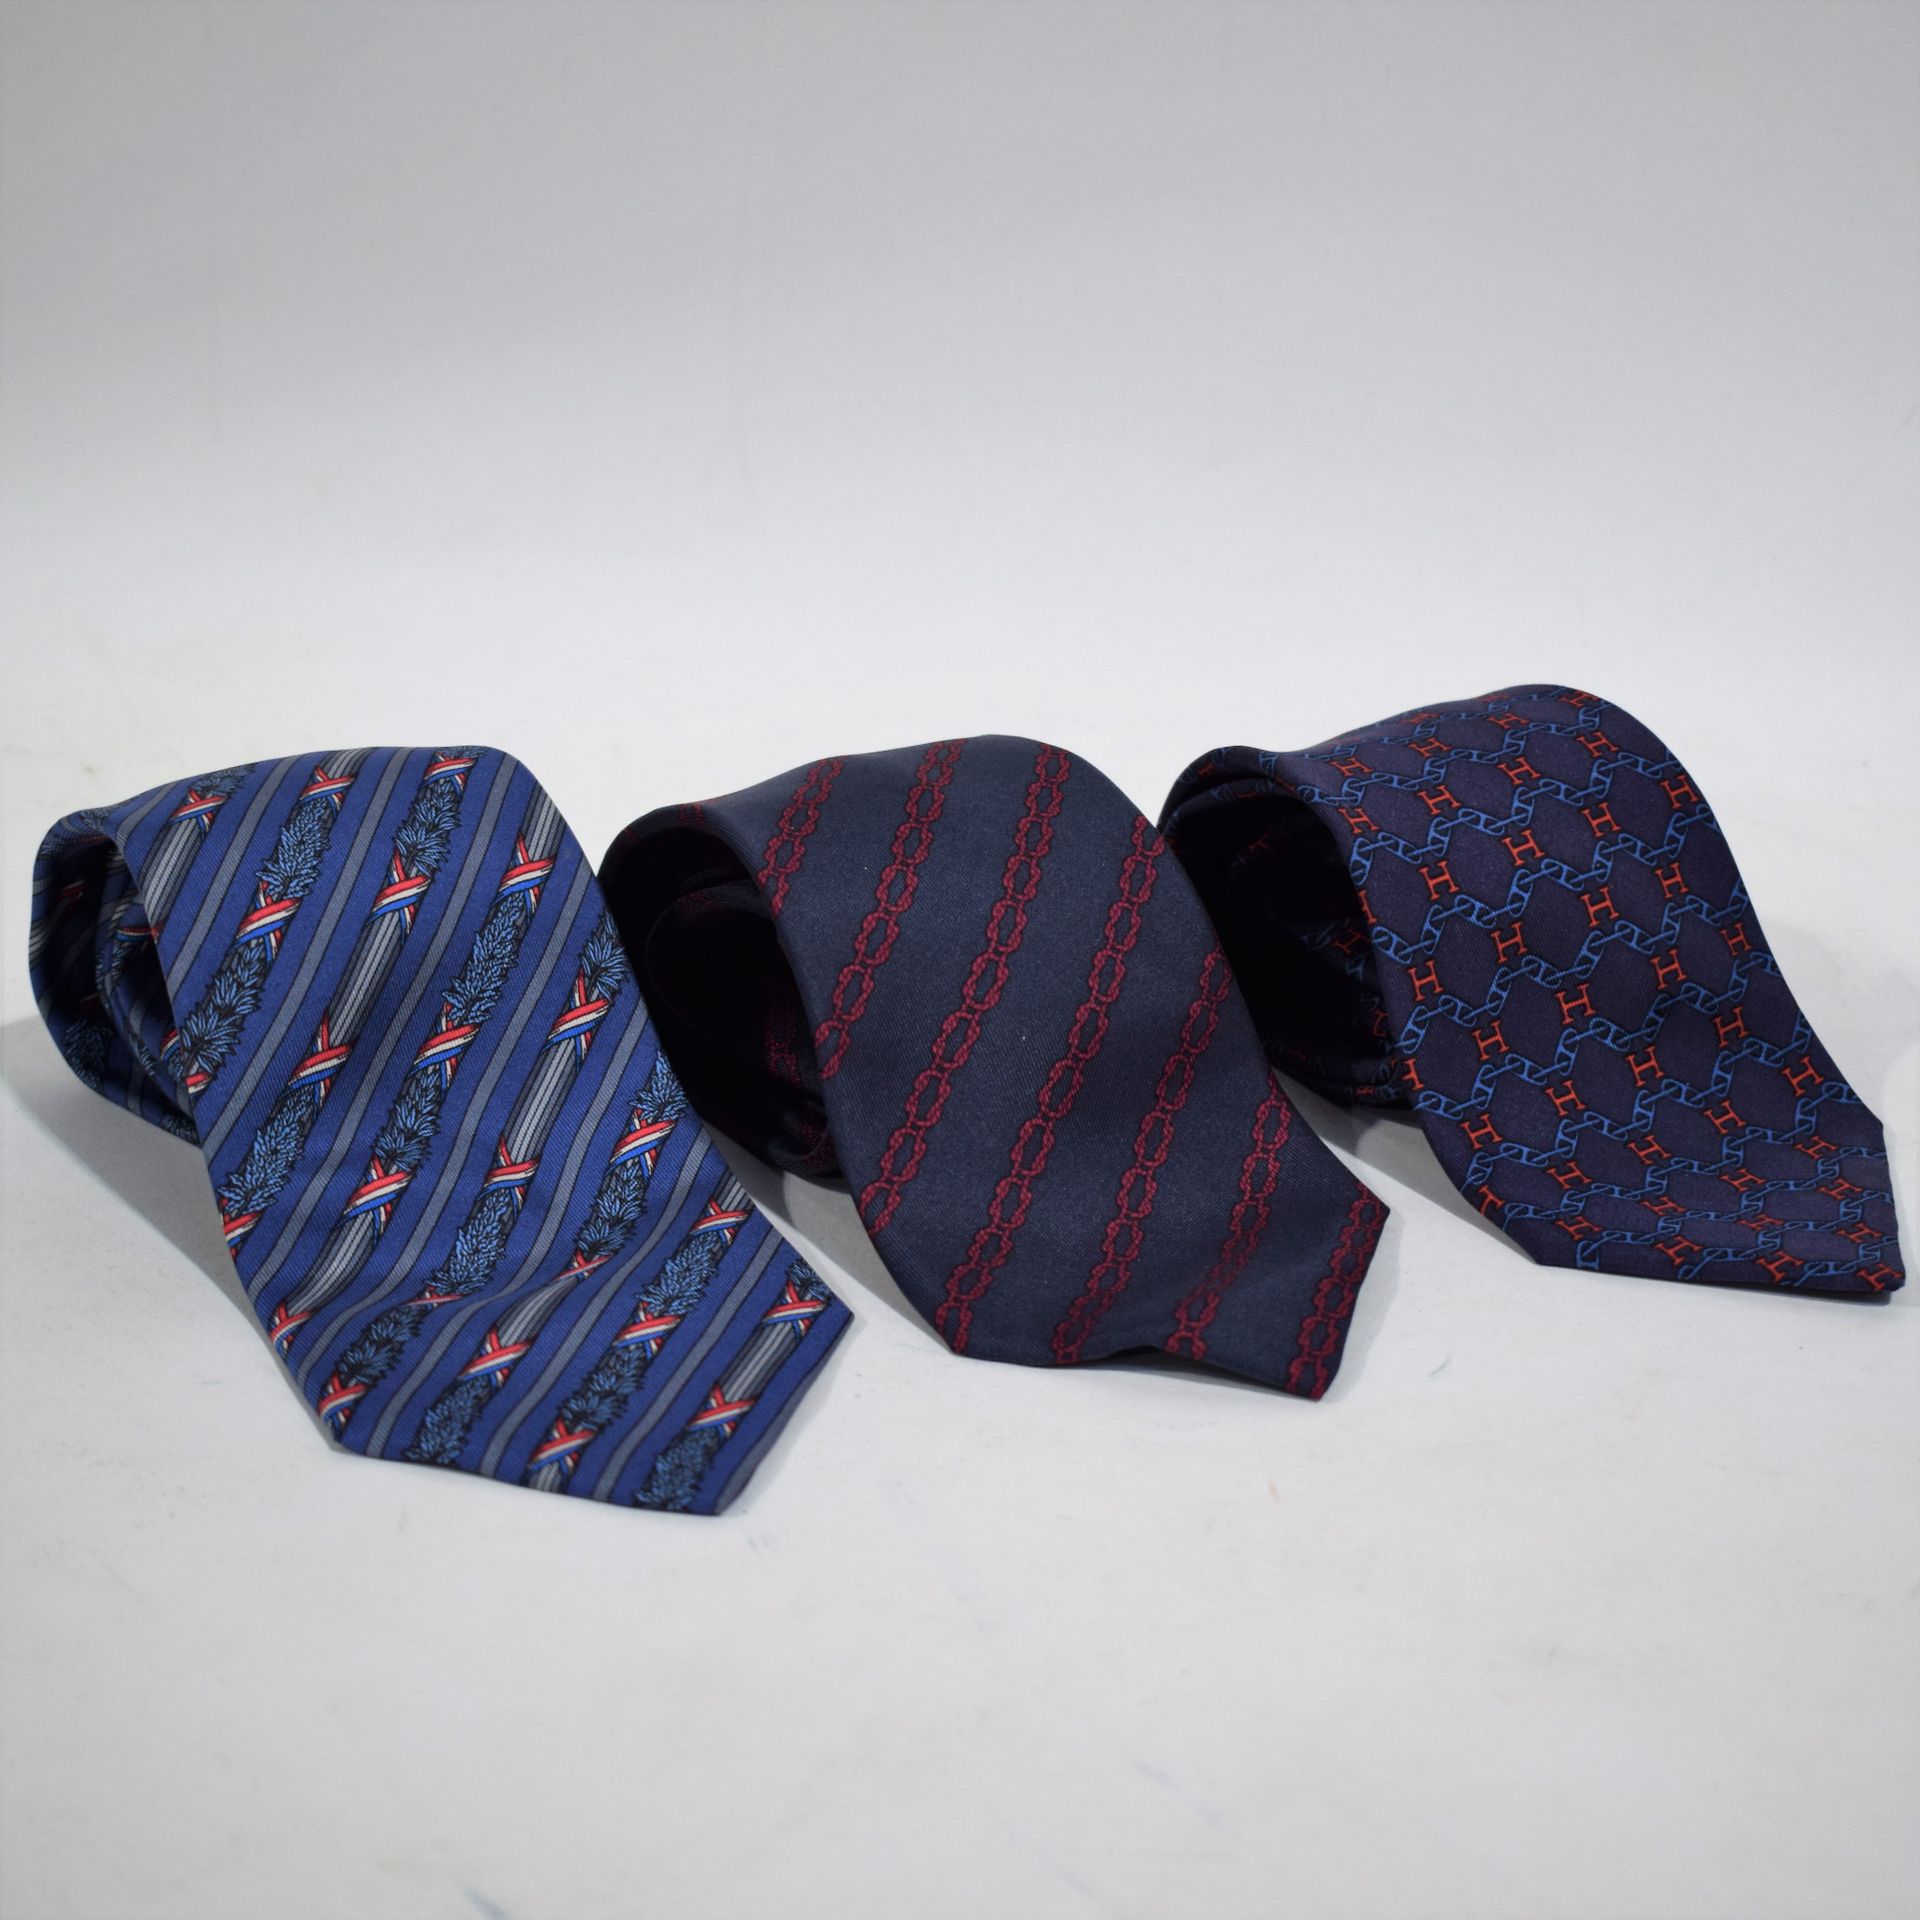 Null (HERMES) Set di 3 cravatte HERMES, colori blu e rosso, 100% seta